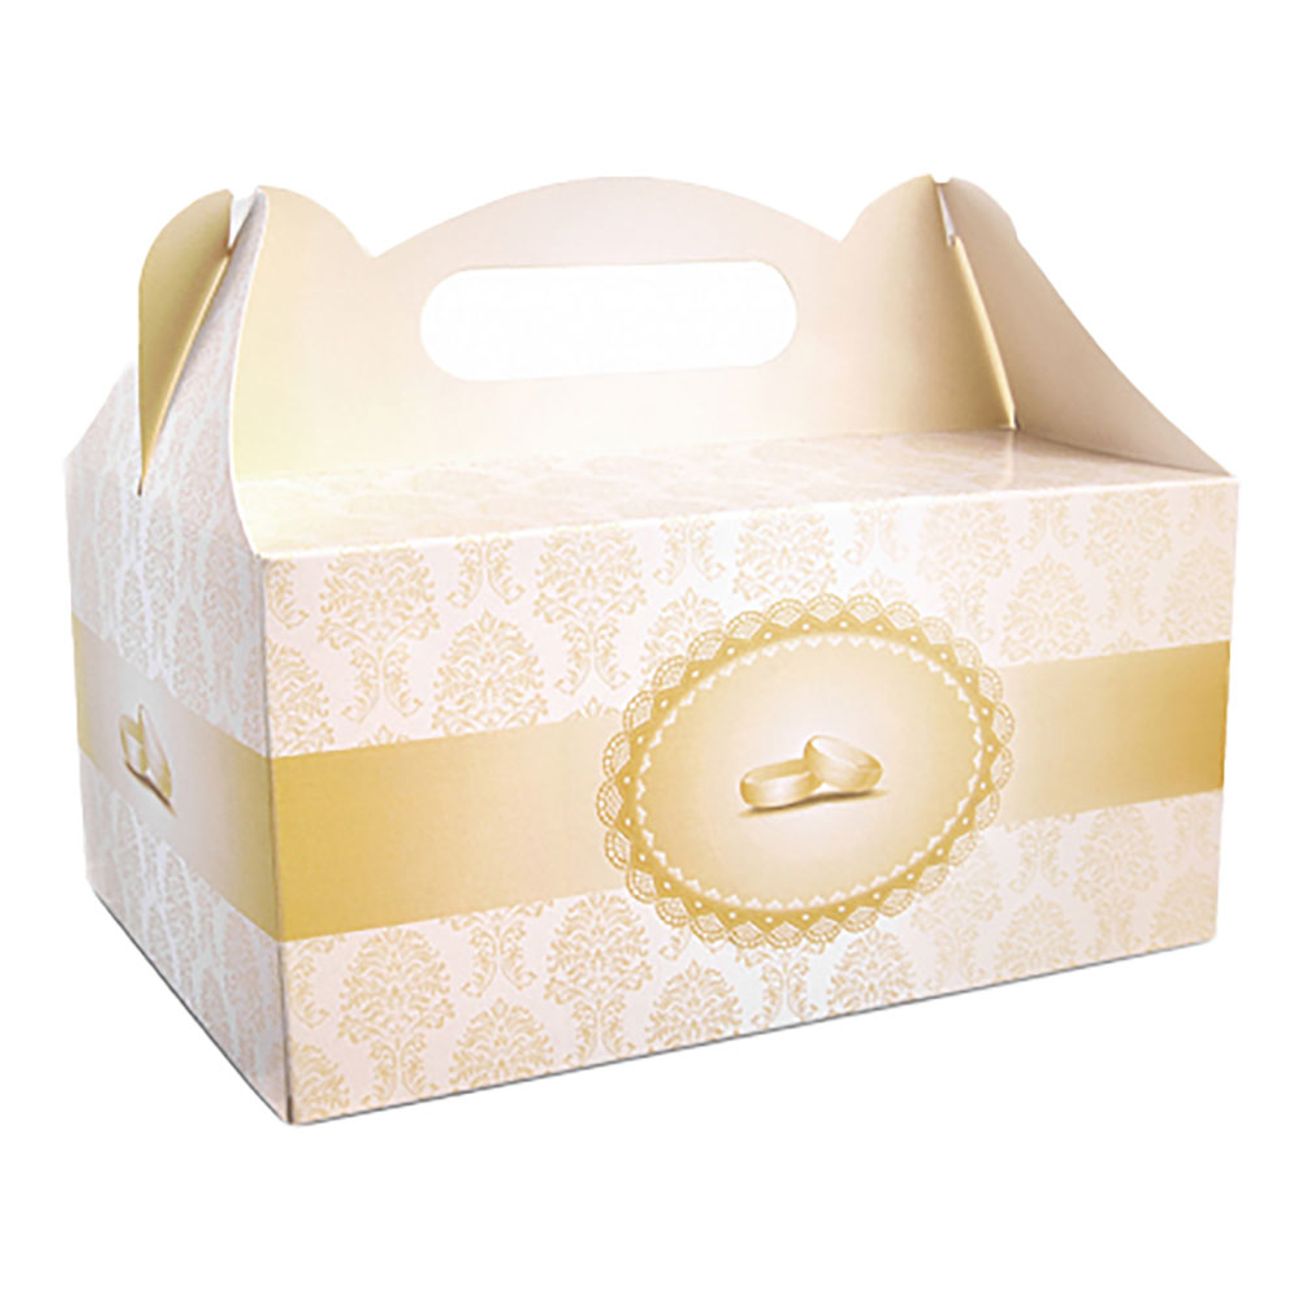 cupcake-box-brollop-82057-1